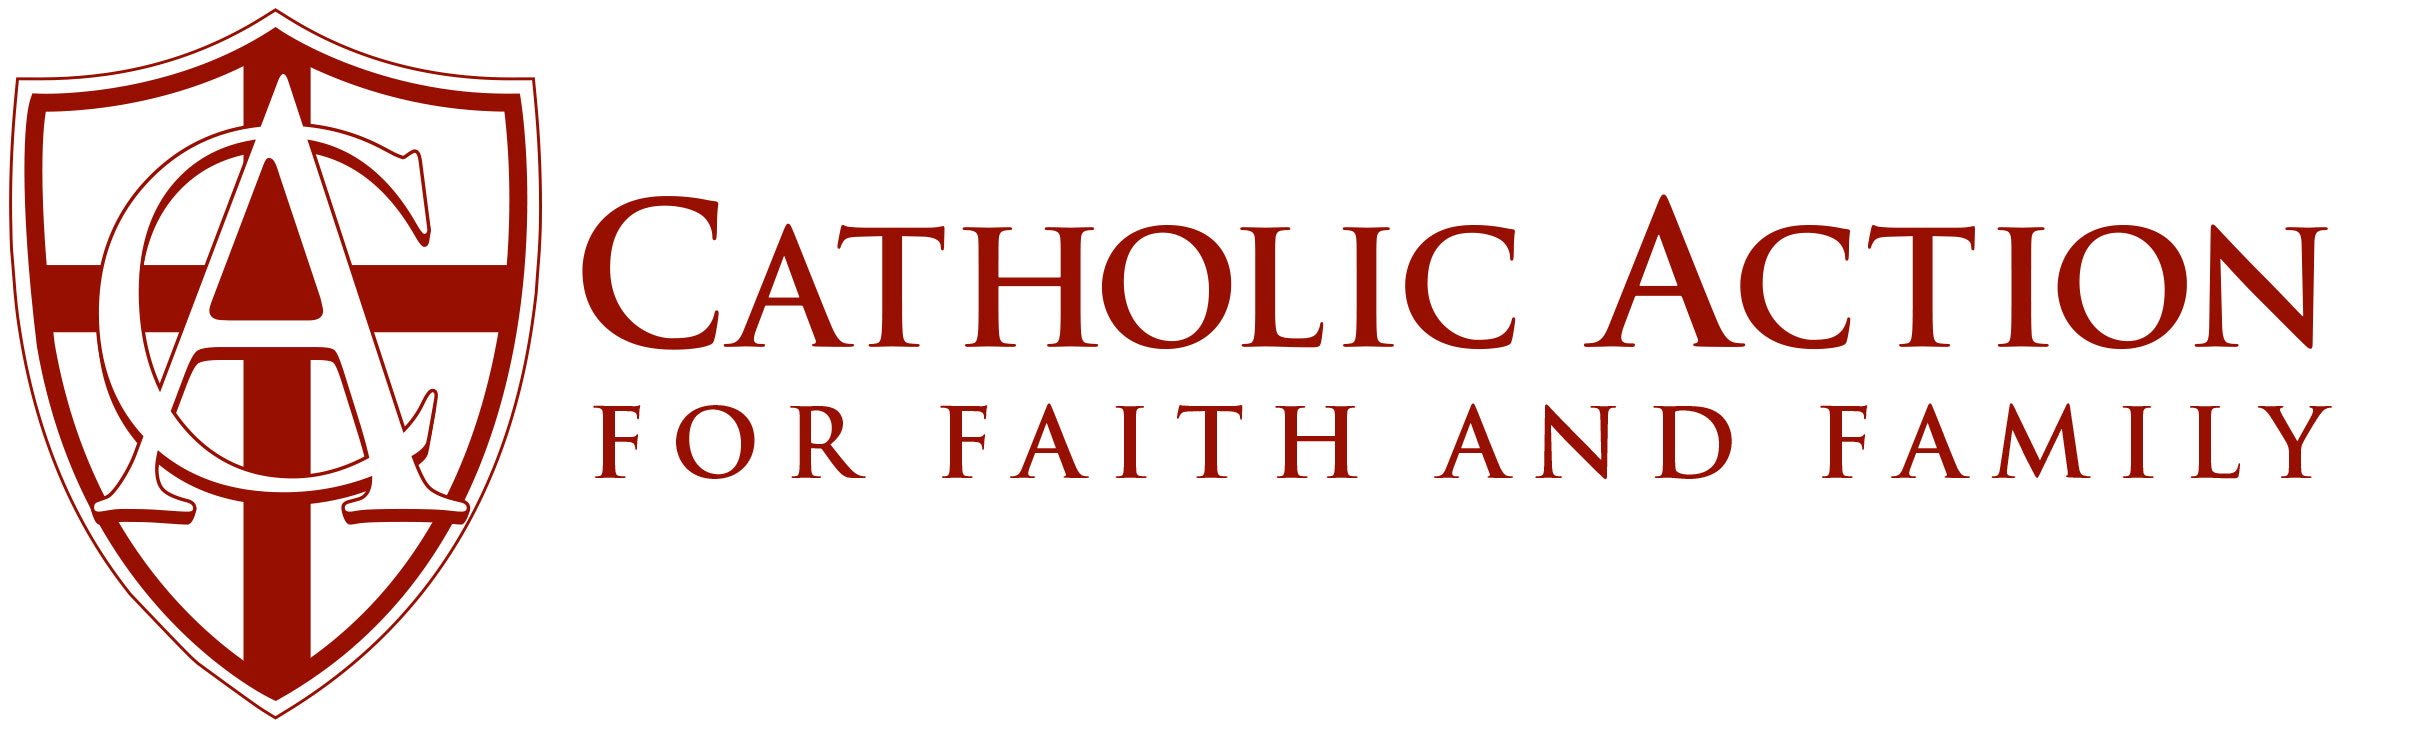 Catholic Action For Faith And Family